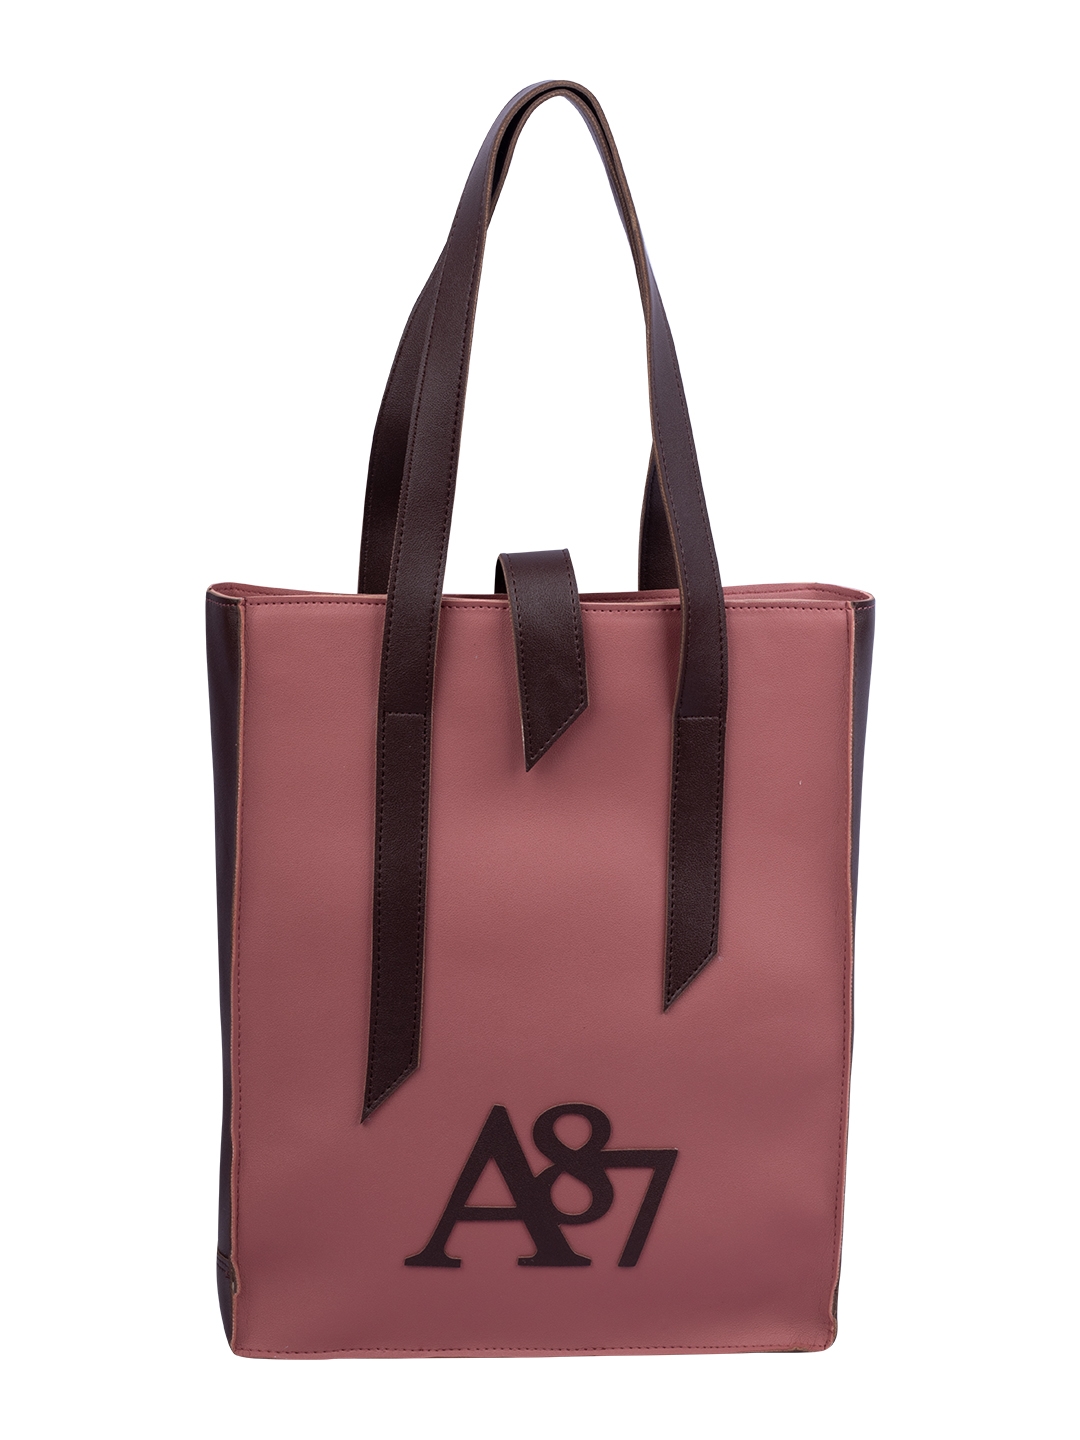 Aeropostale | Aeropostale Claire Women's Handbag Tote Casual Pink